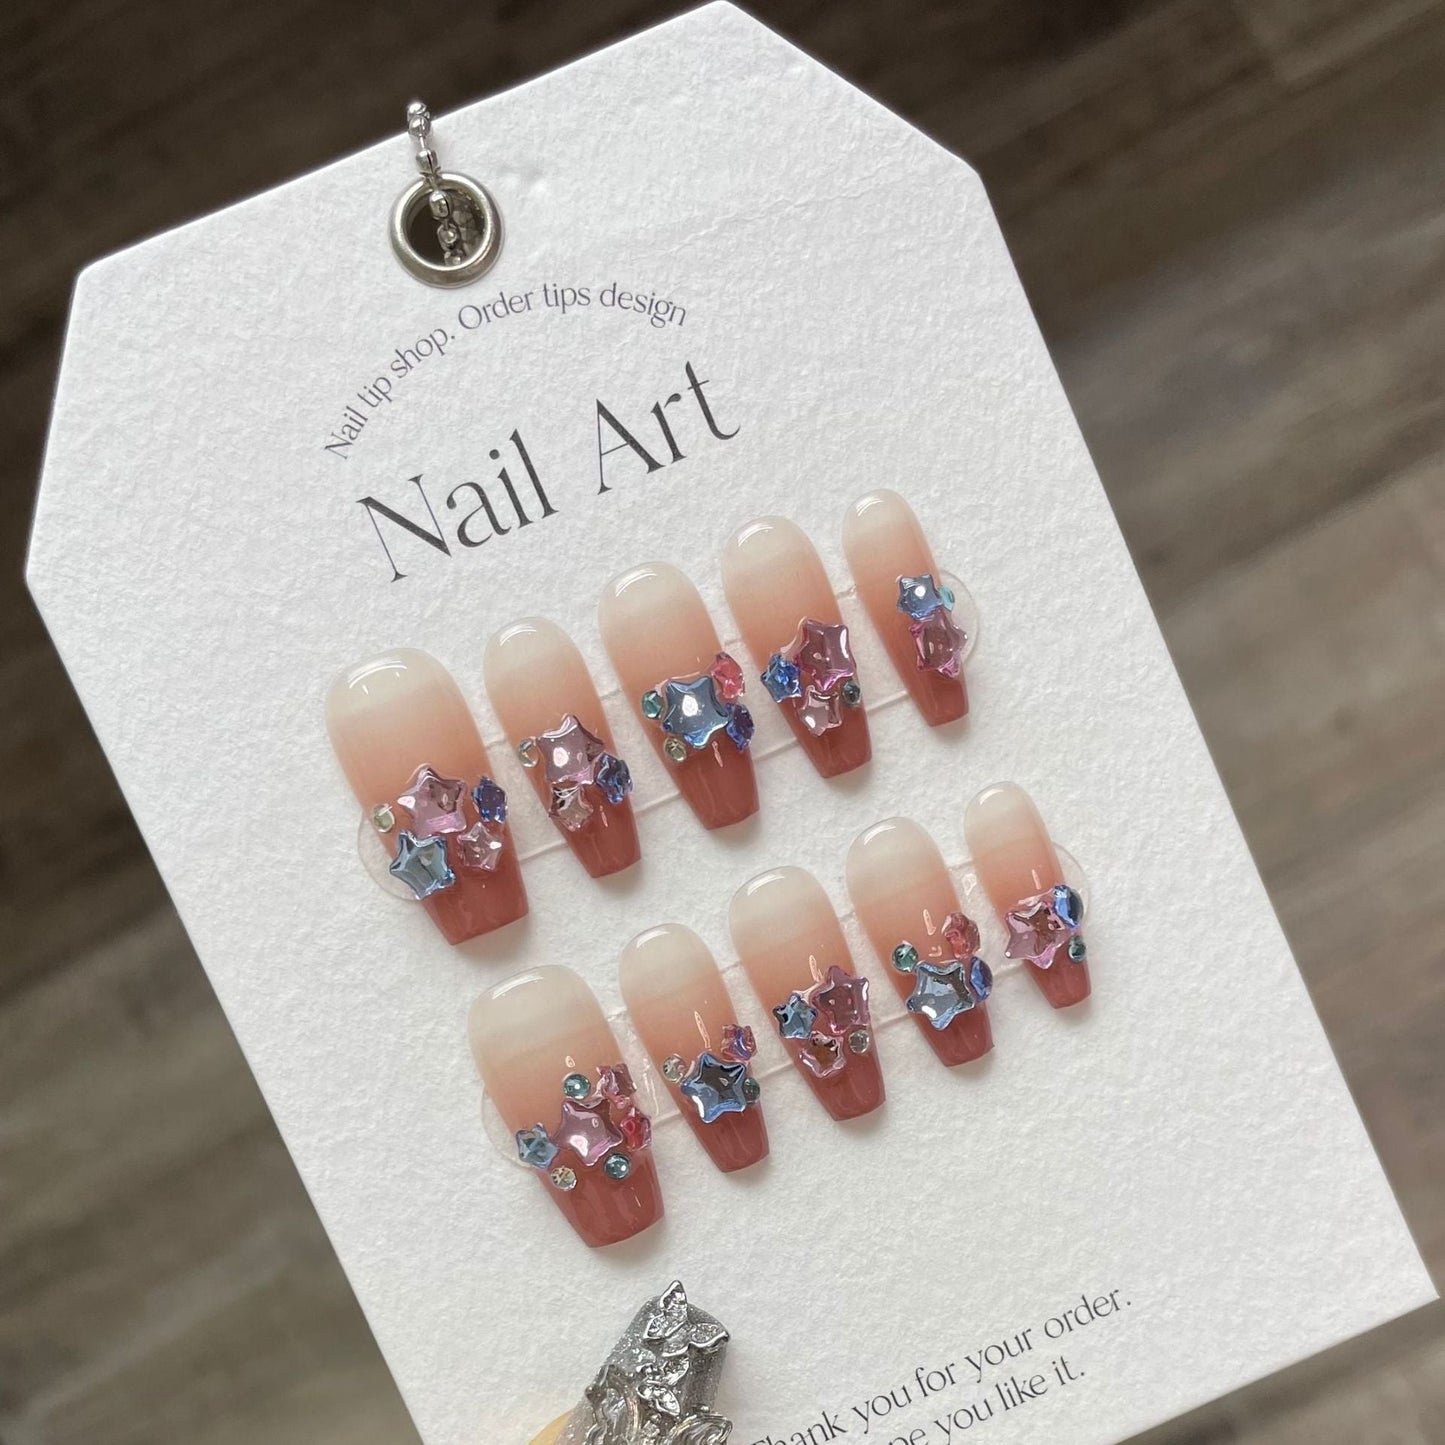 915   Star Rhinestone style press on nails 100% handmade false nails pink nude clear